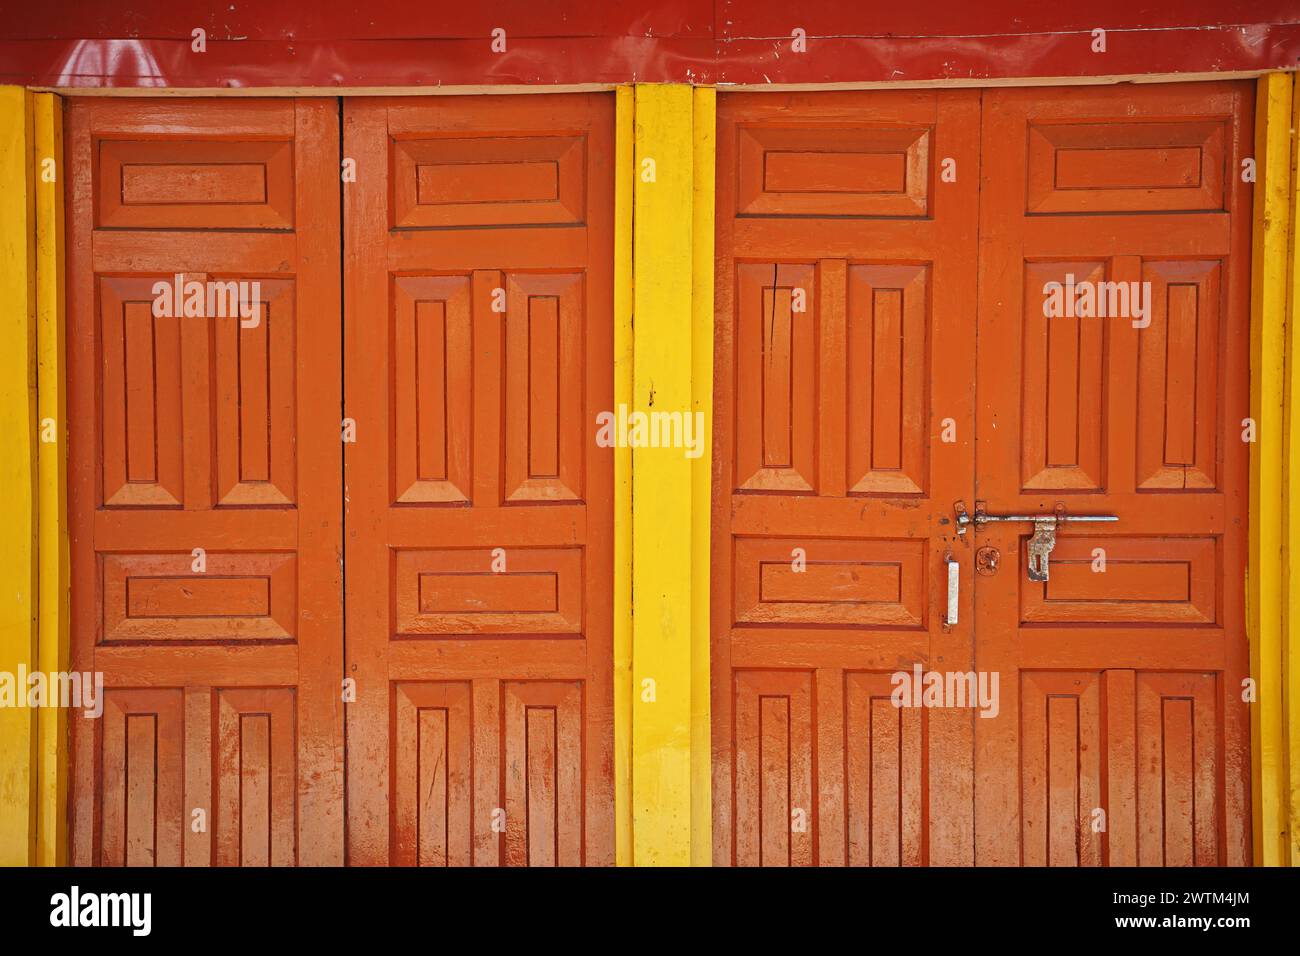 Details and design of ancient wooden orange and yellow door Stock Photo